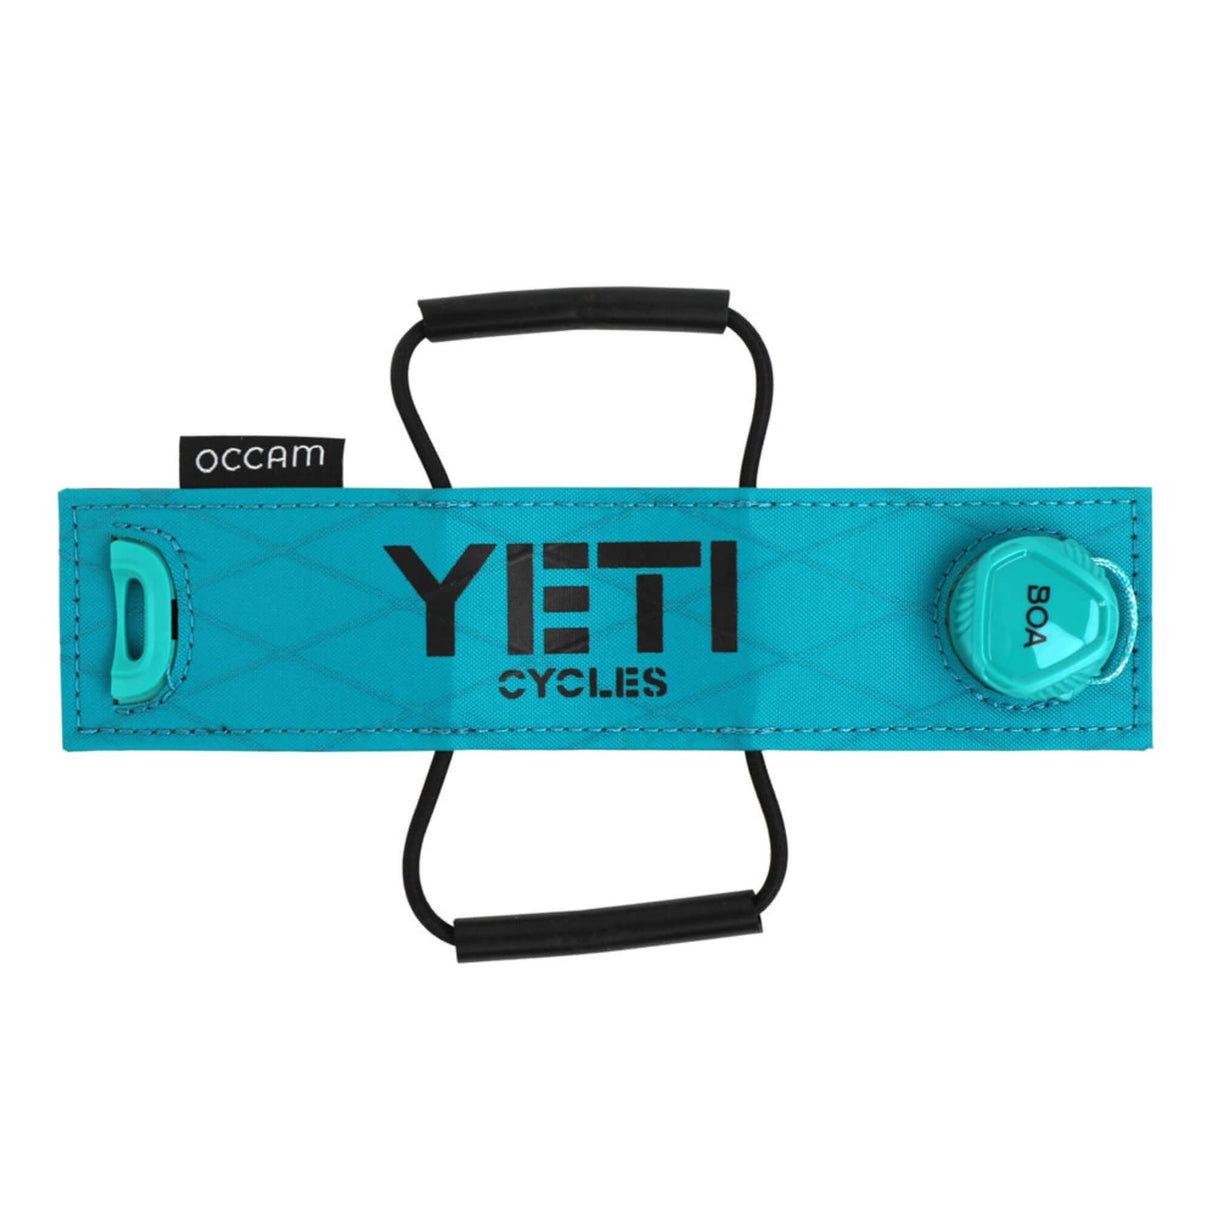 Yeti / Occam Designs Apex Frame Strap Turquoise Logo